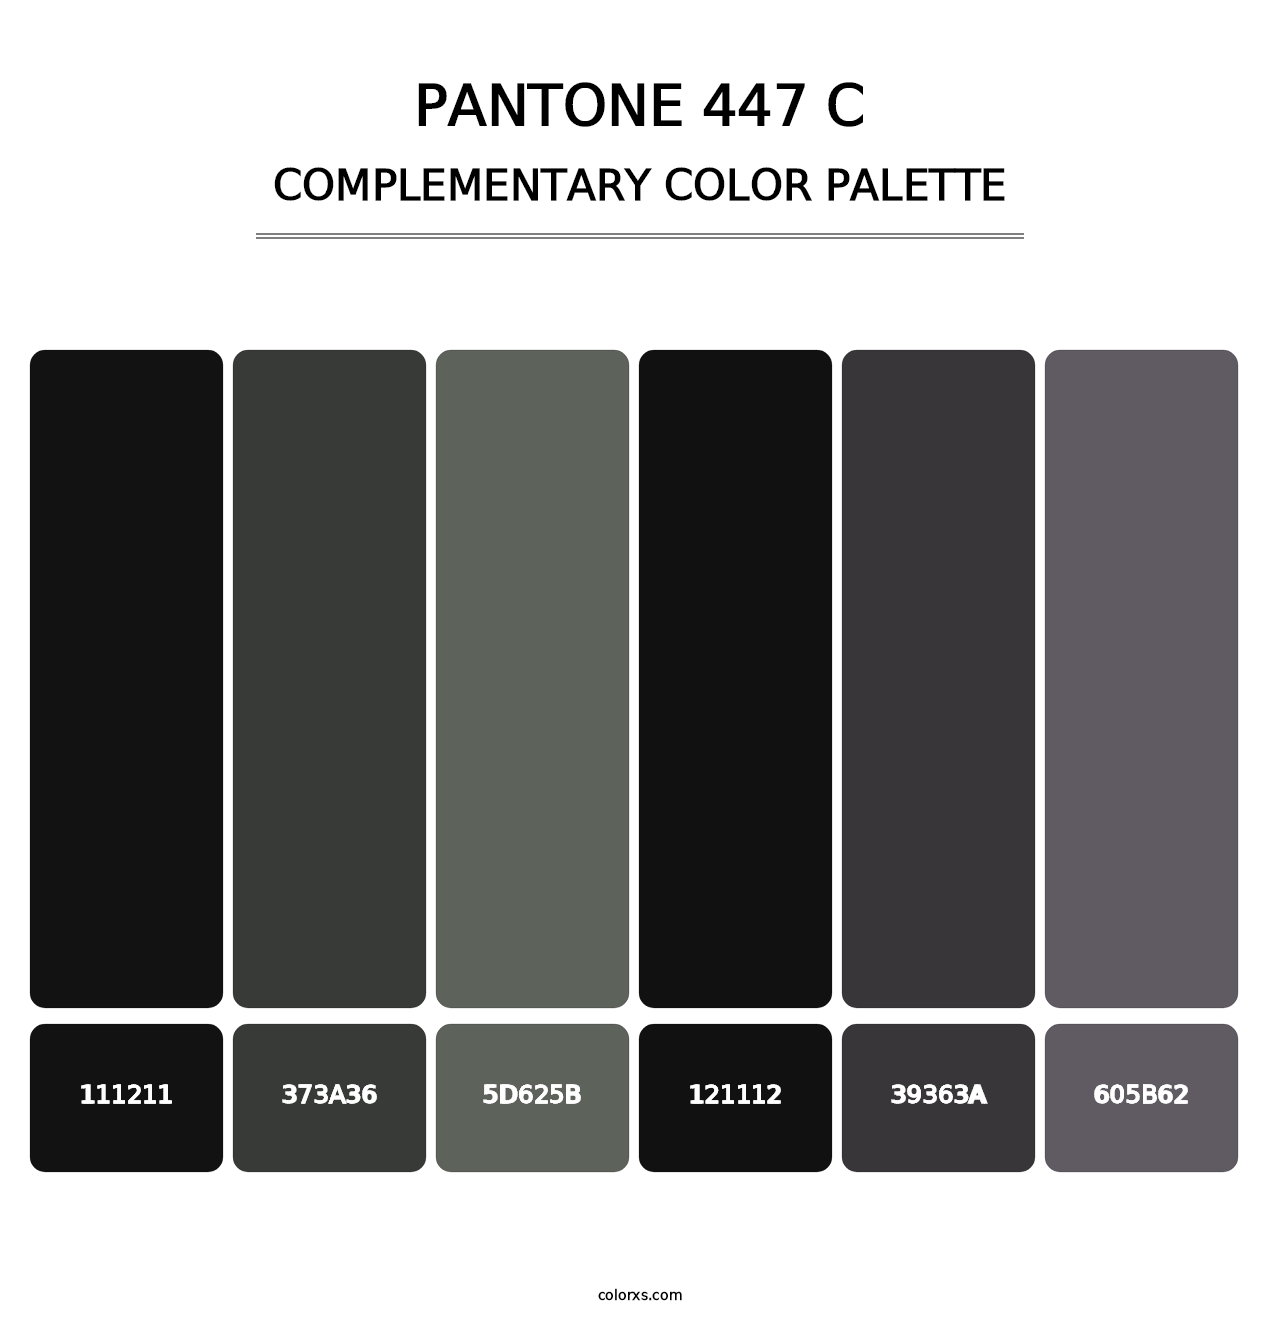 PANTONE 447 C - Complementary Color Palette